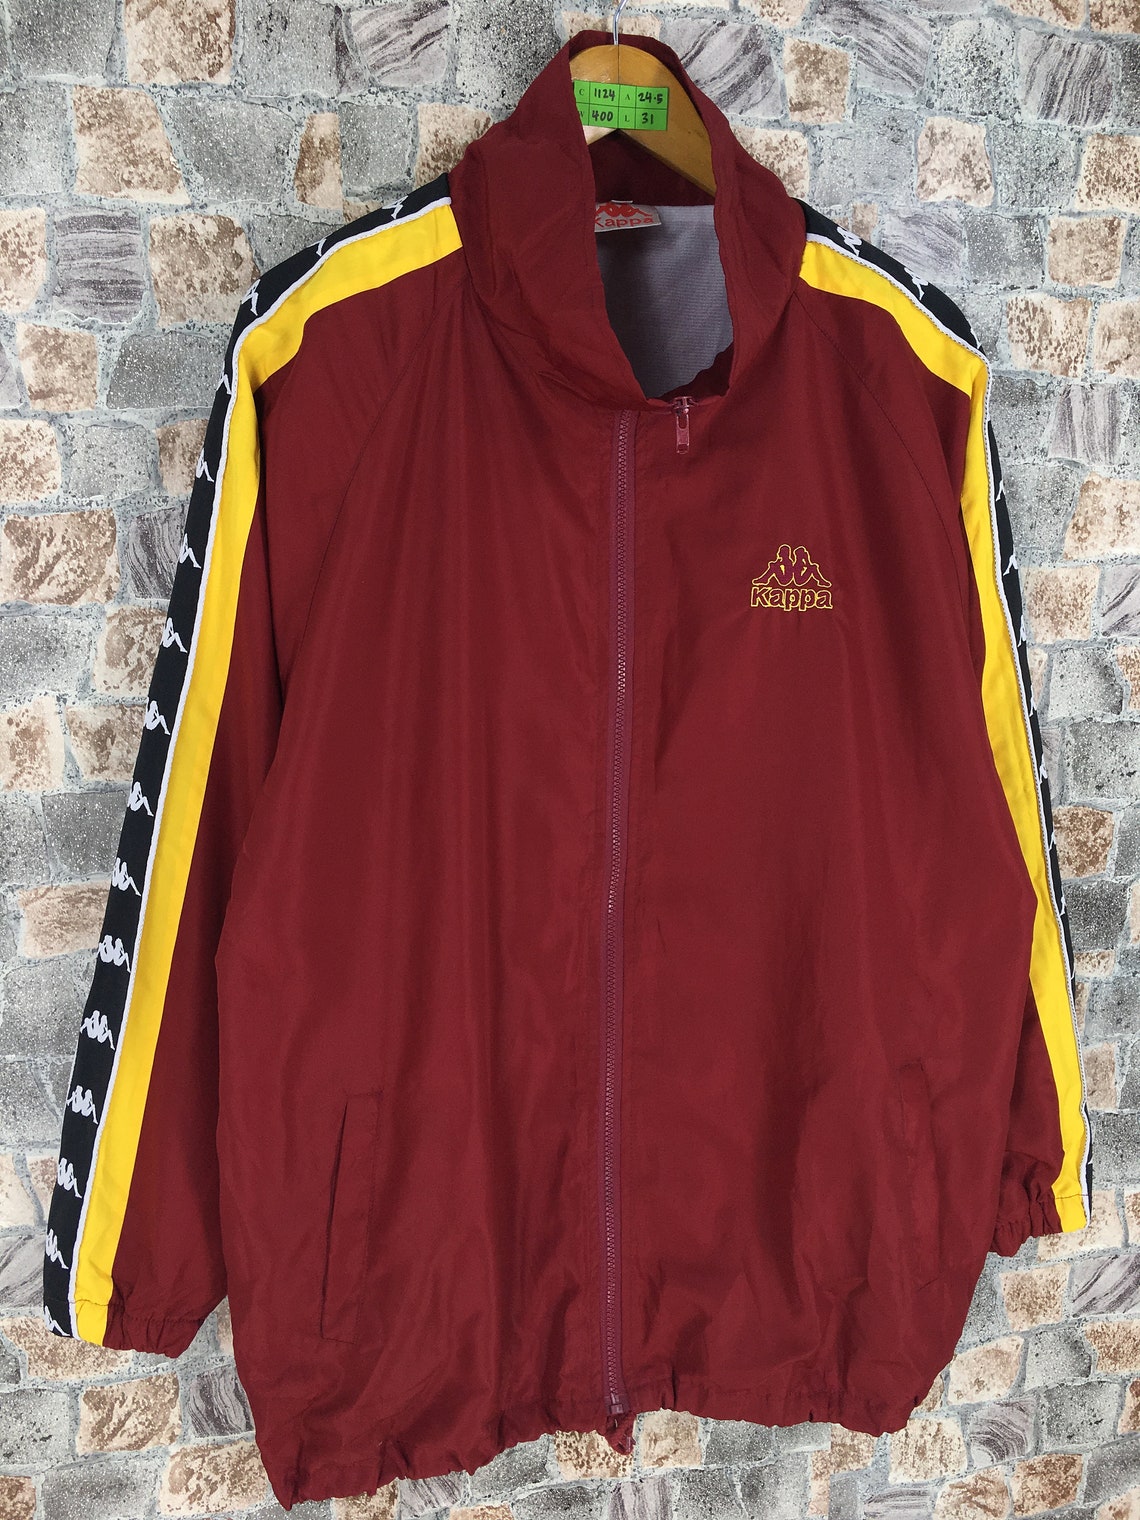 Kappa Track Top Jacket Large Vintage 90's Kappa Sportswear | Etsy